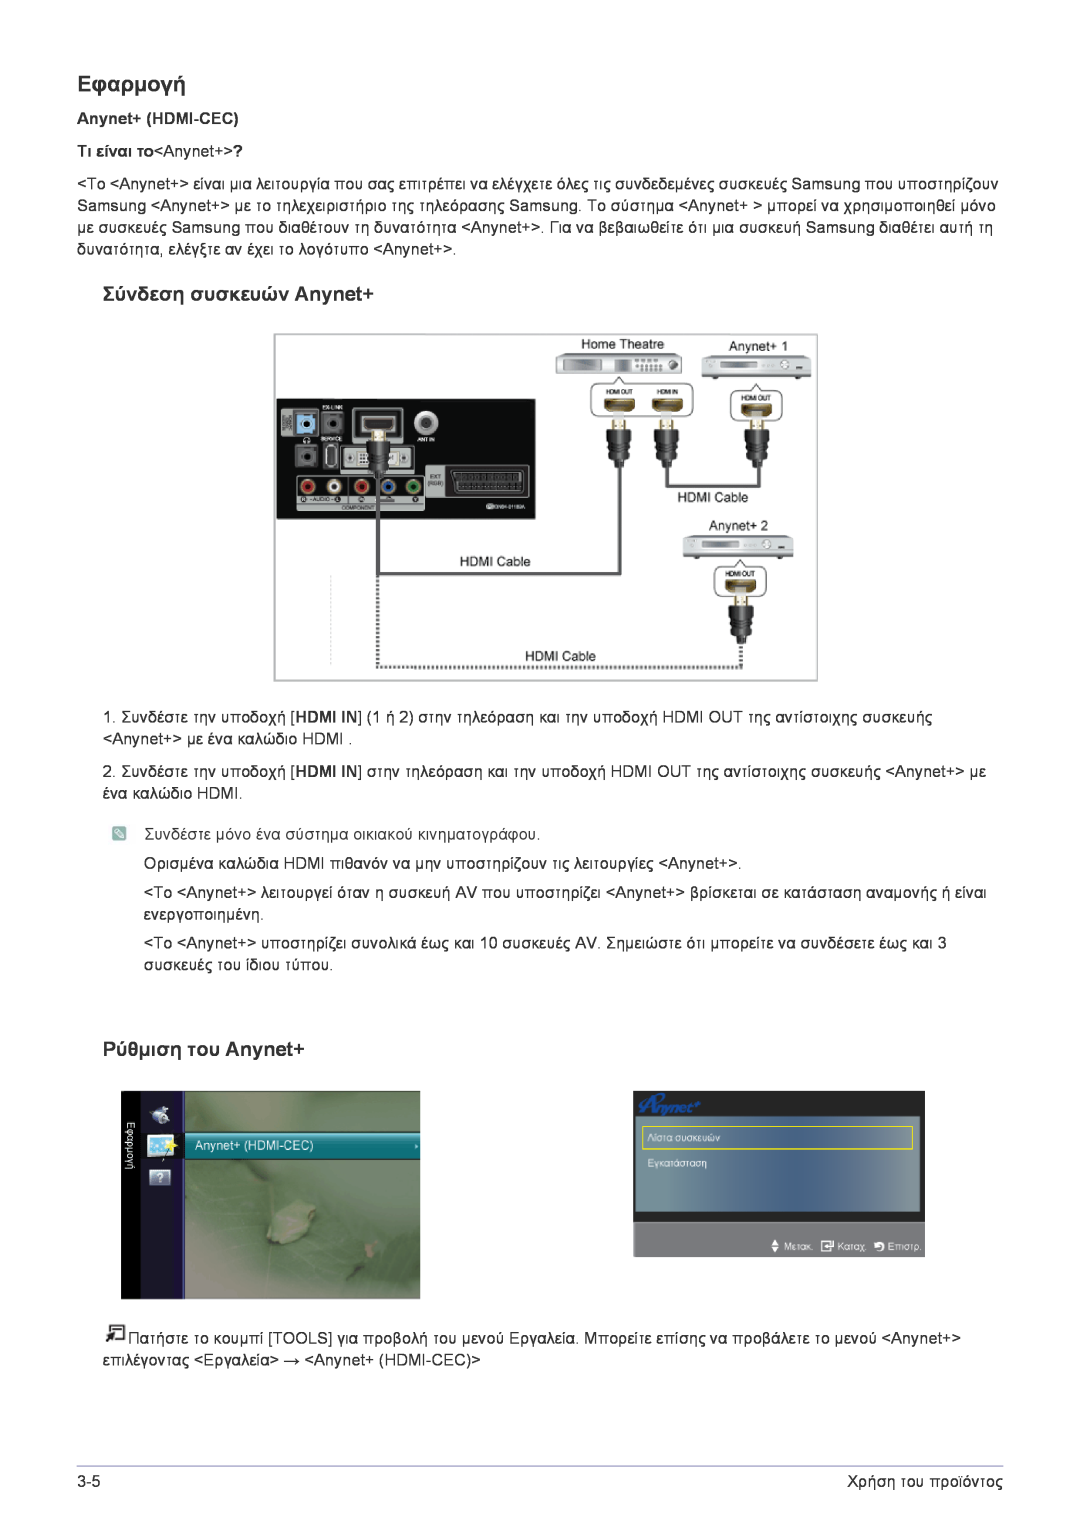 Samsung LS22FMDGF/EN manual Εφαρμογή, Σύνδεση συσκευών Anynet+, Ρύθμιση του Anynet+, Anynet+ HDMI-CEC Τι είναι τοAnynet+? 